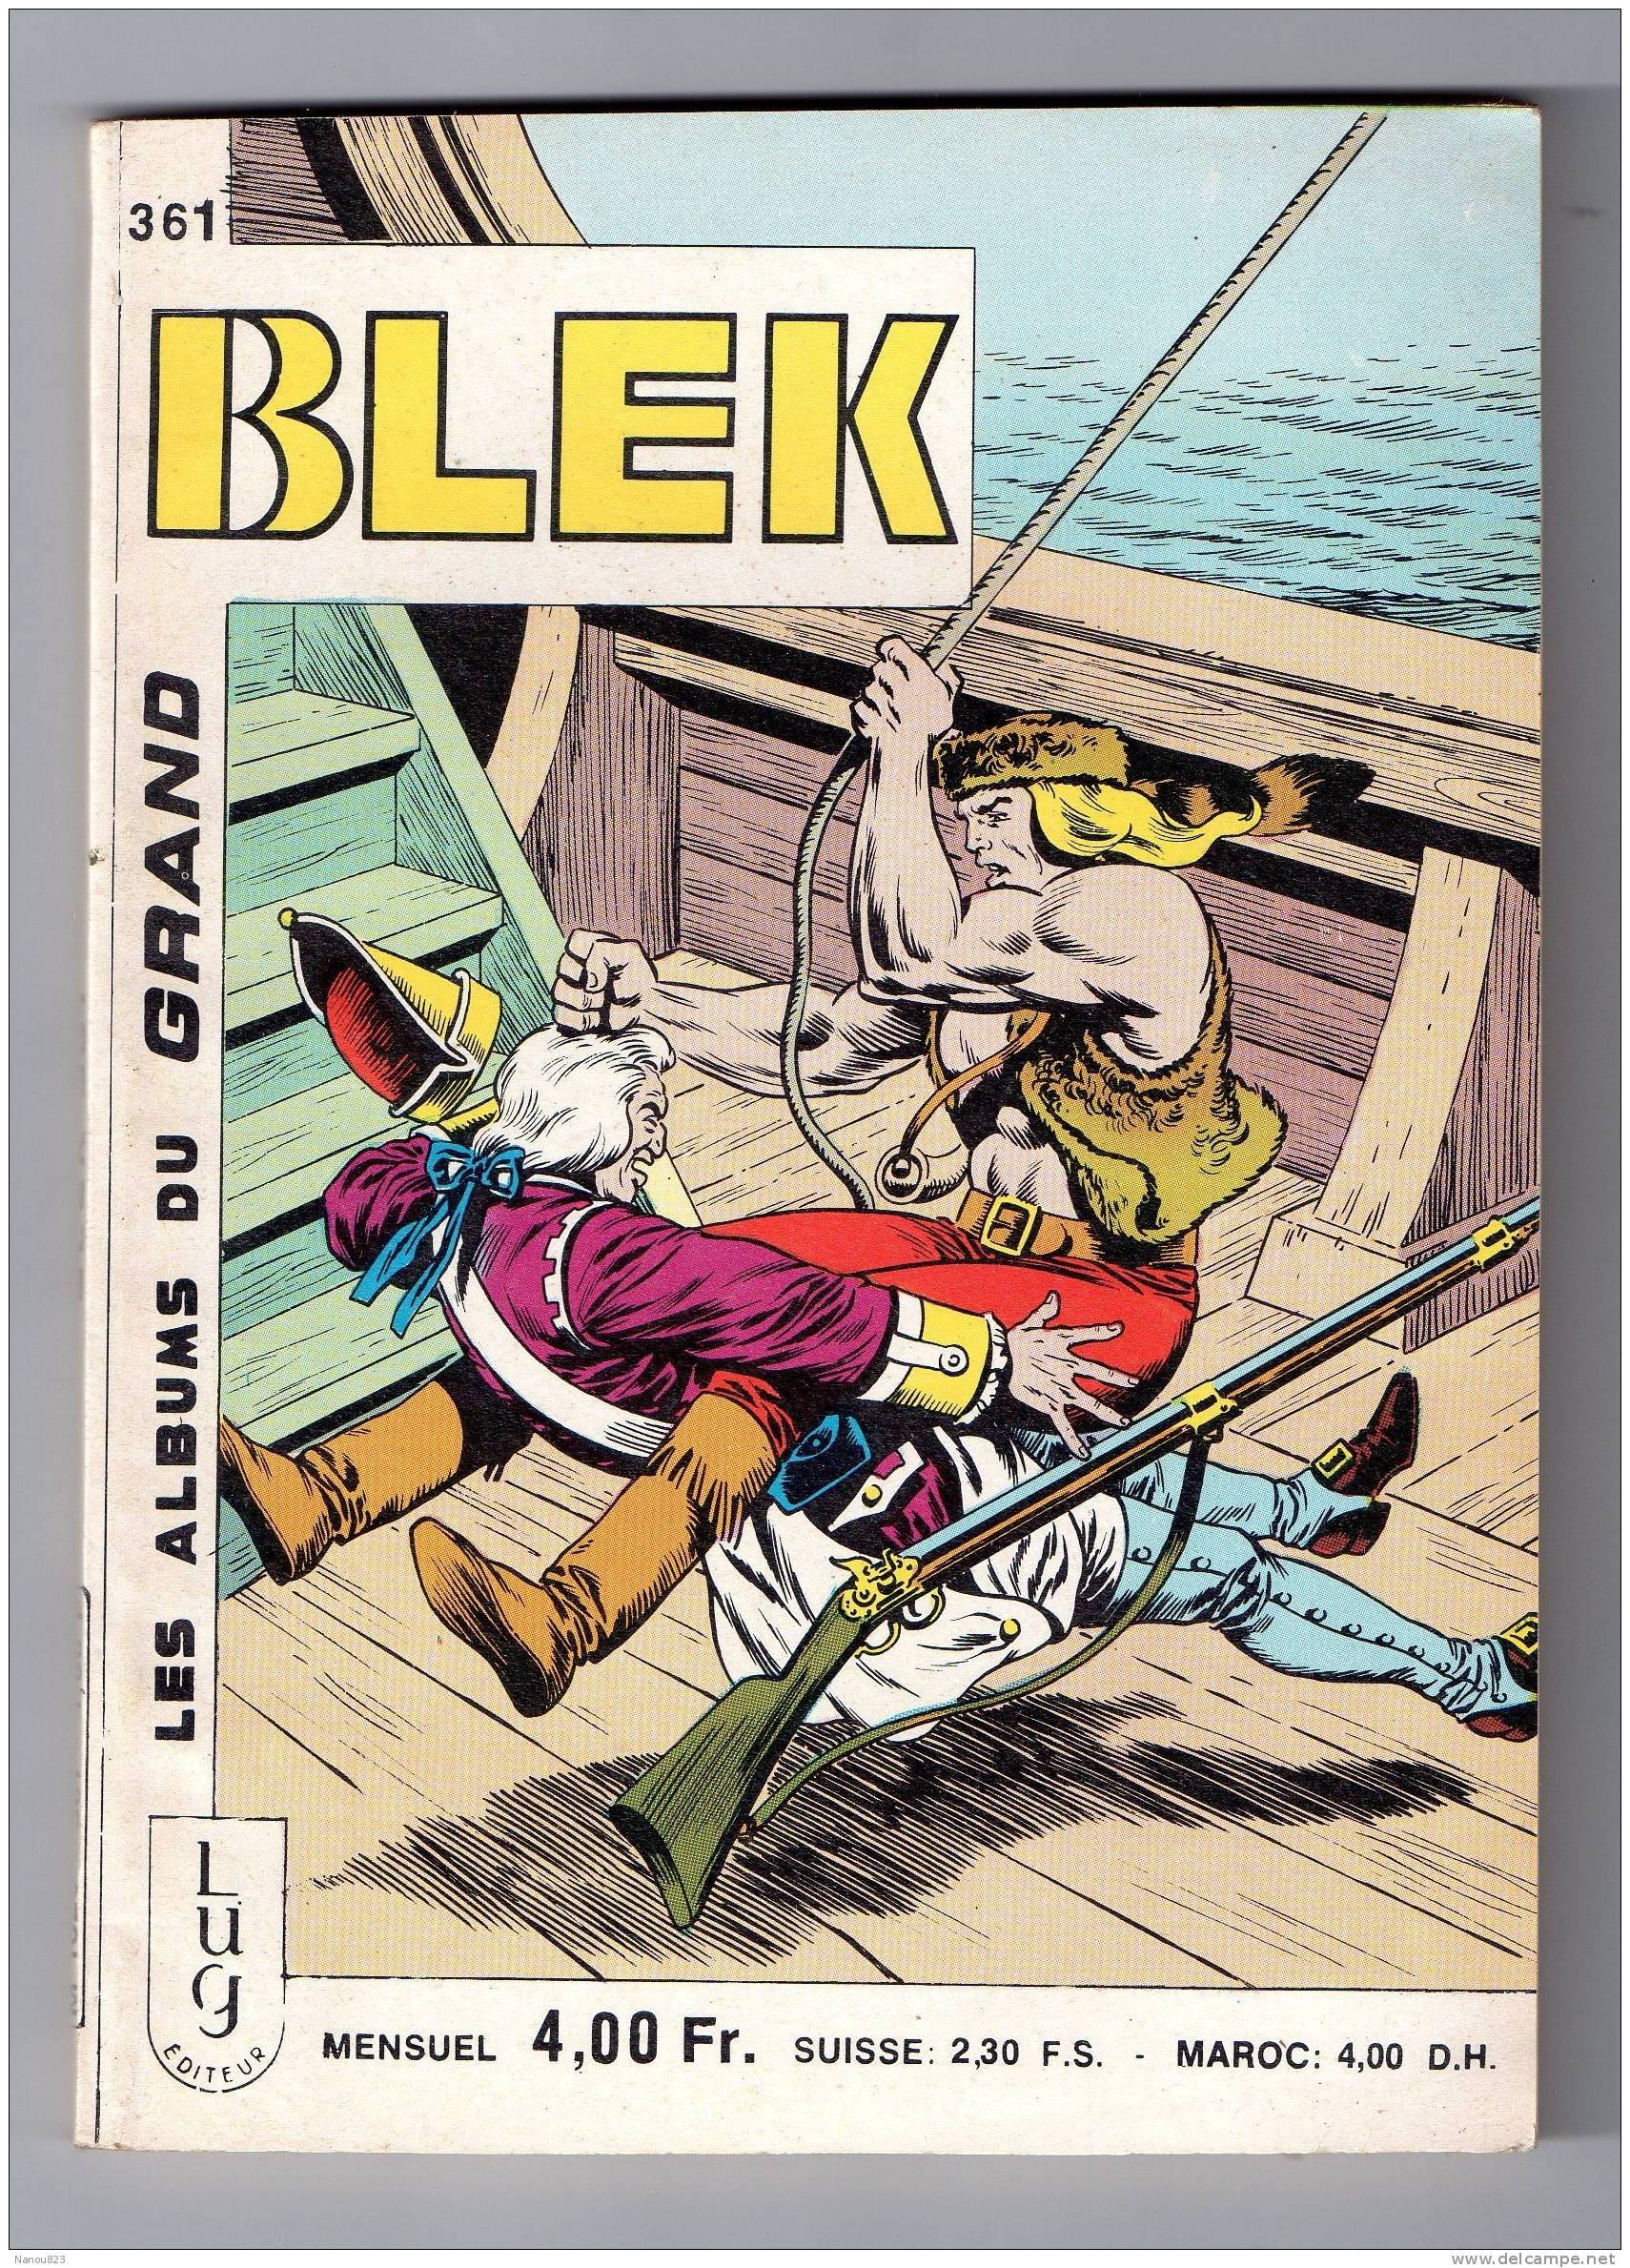 LES ALBUMS DU GRAND BLEK - N°361 - LUG - 5 JANVIER 1981 - Blek